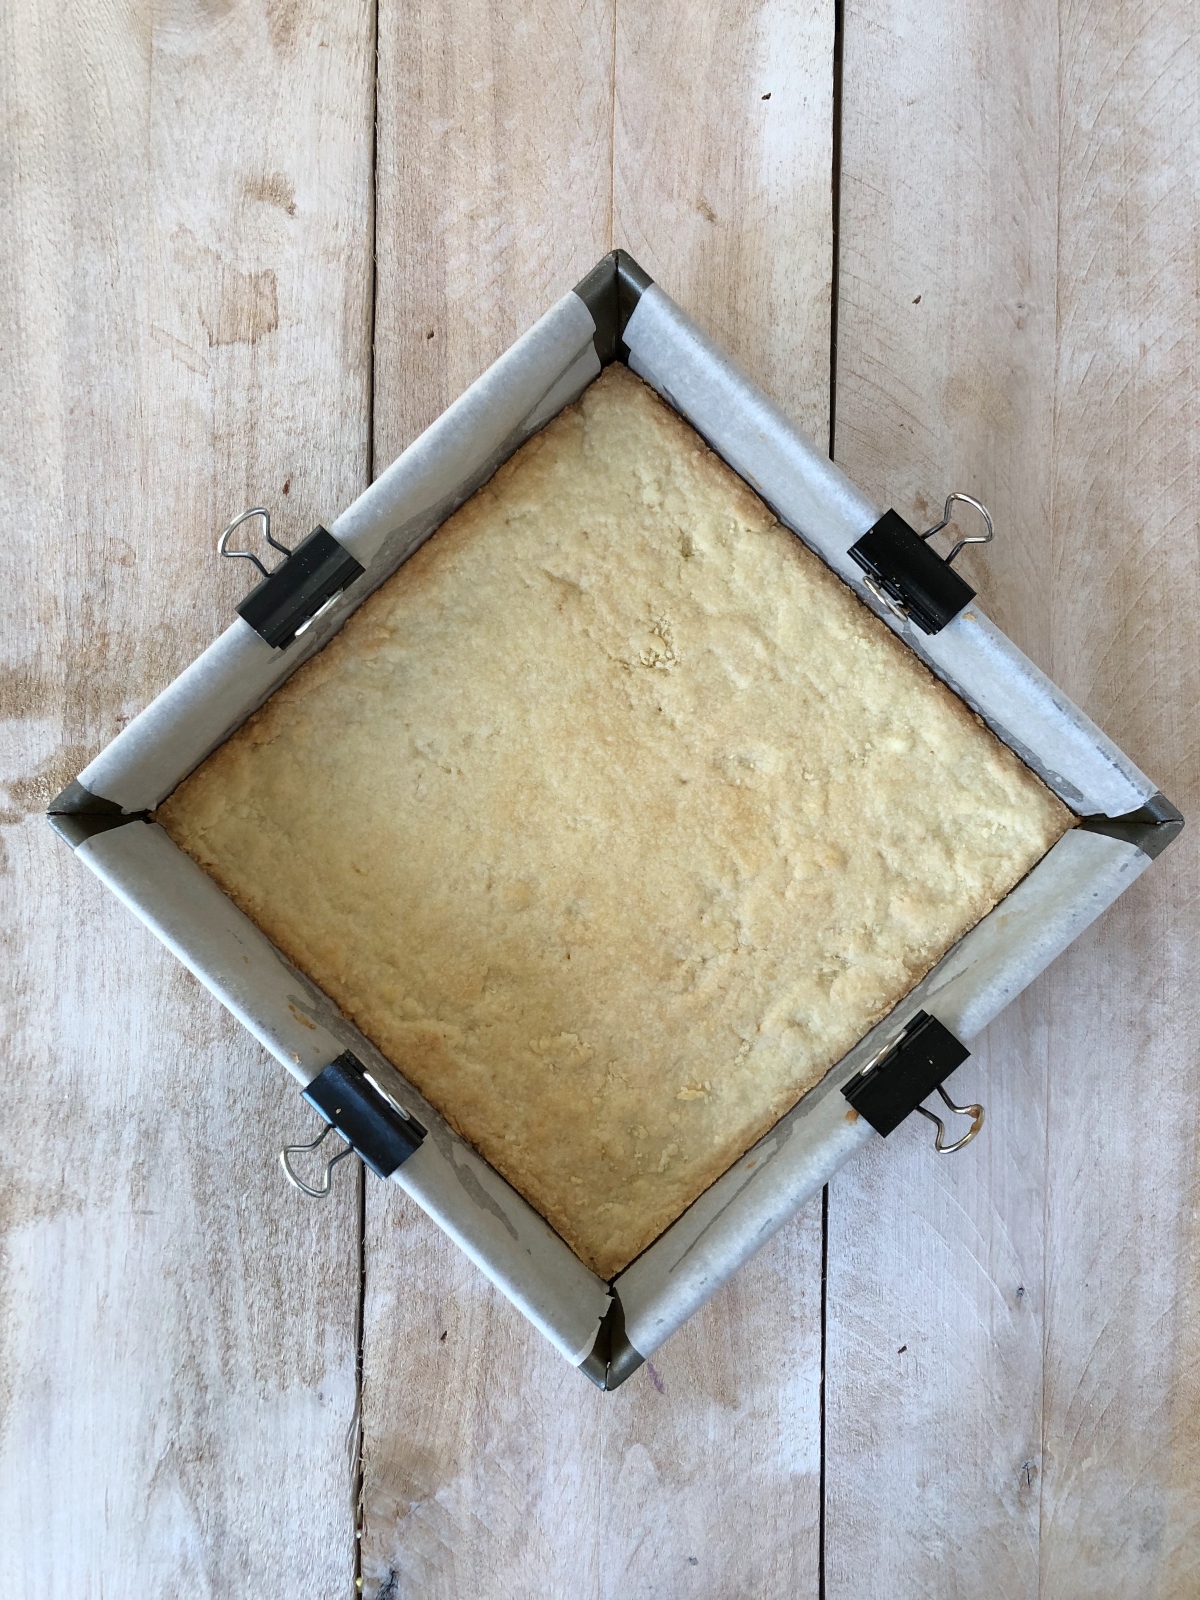 Shortbread base baked to golden brown.